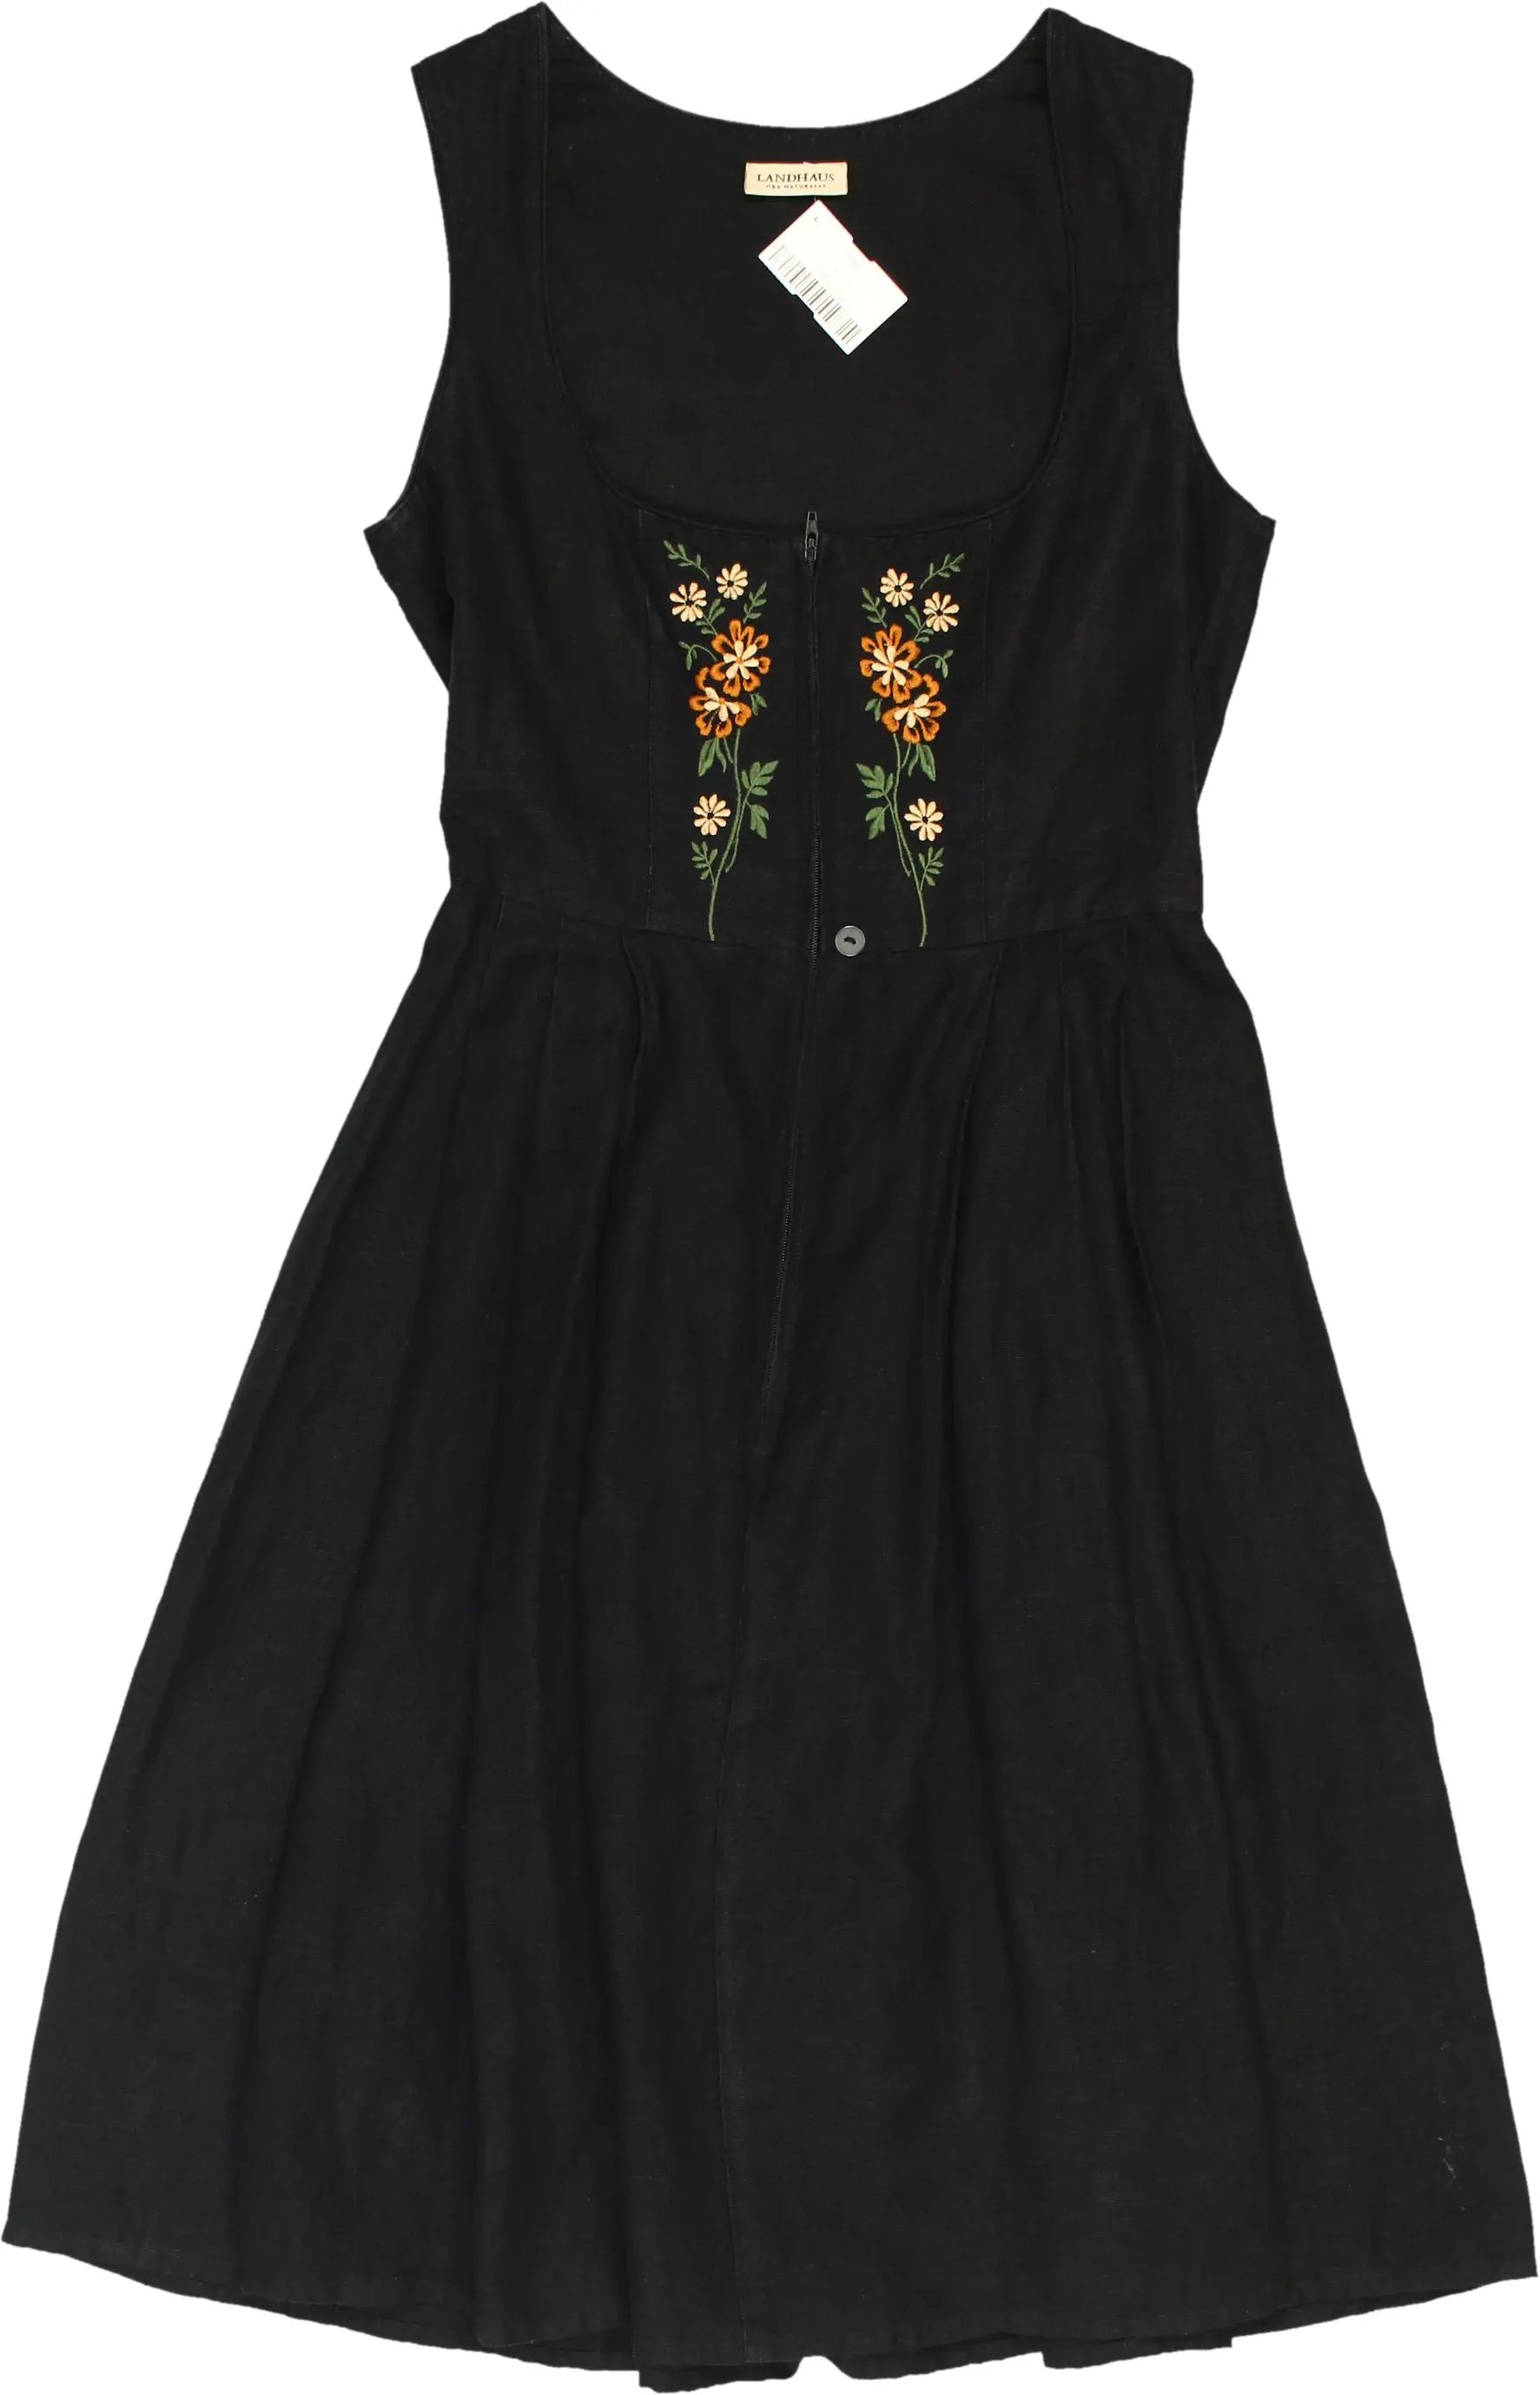 Landhaus - Linen Blend Dress- ThriftTale.com - Vintage and second handclothing